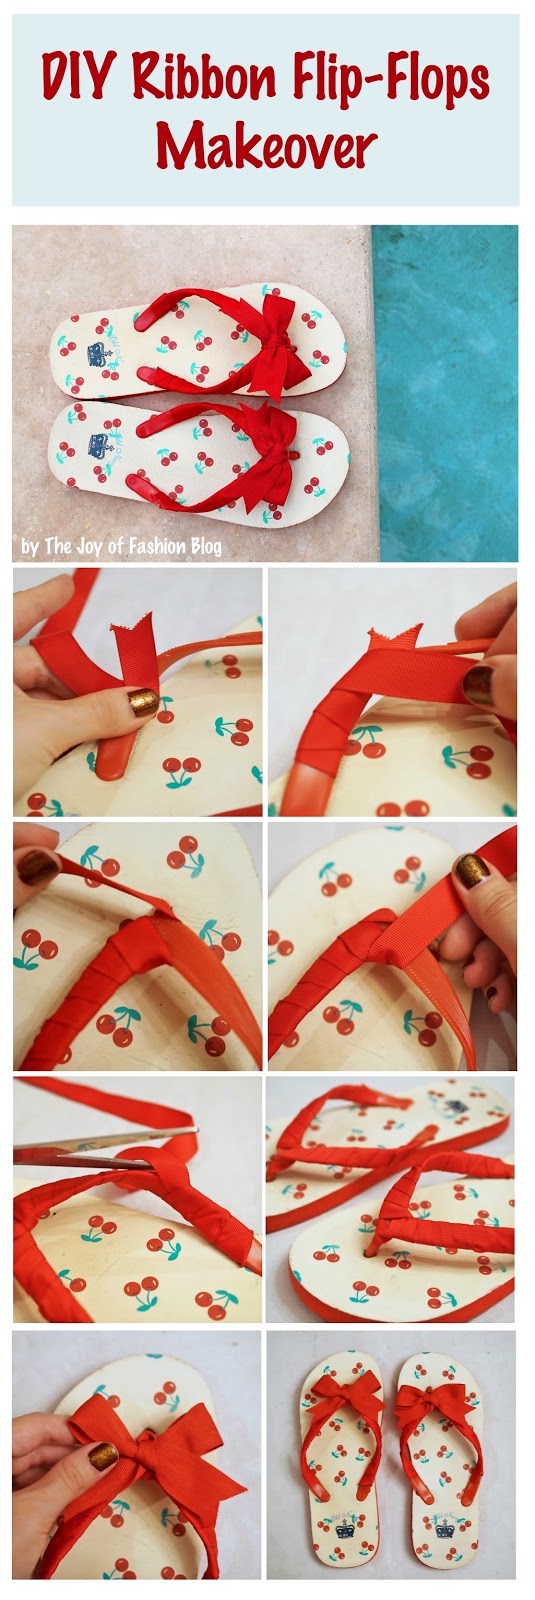 Simple DIY Flip Flops Makeover using Ribbon